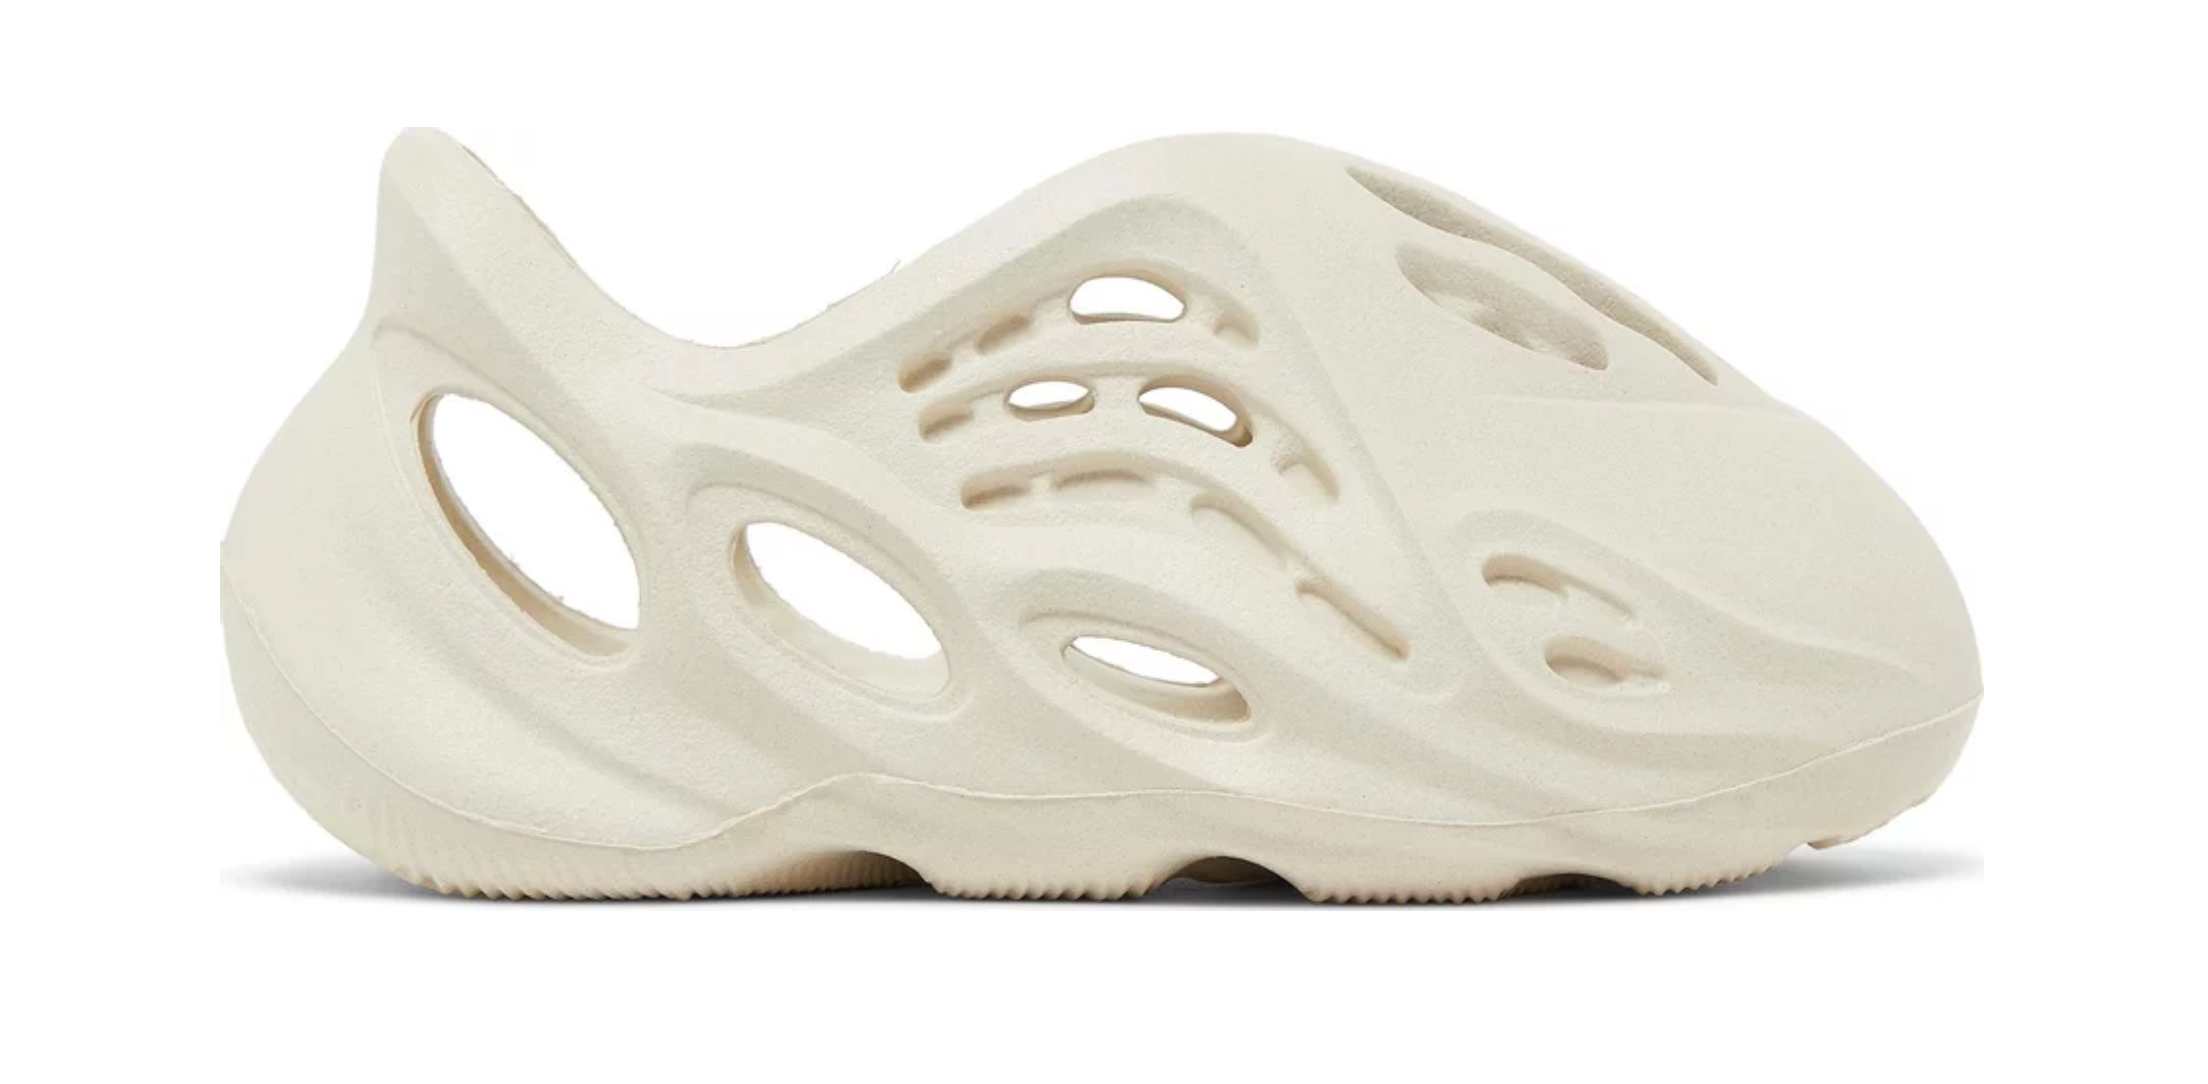 Adidas Sand Foam Runner (Kids) Size UK 10K - EU 28 - US 10K